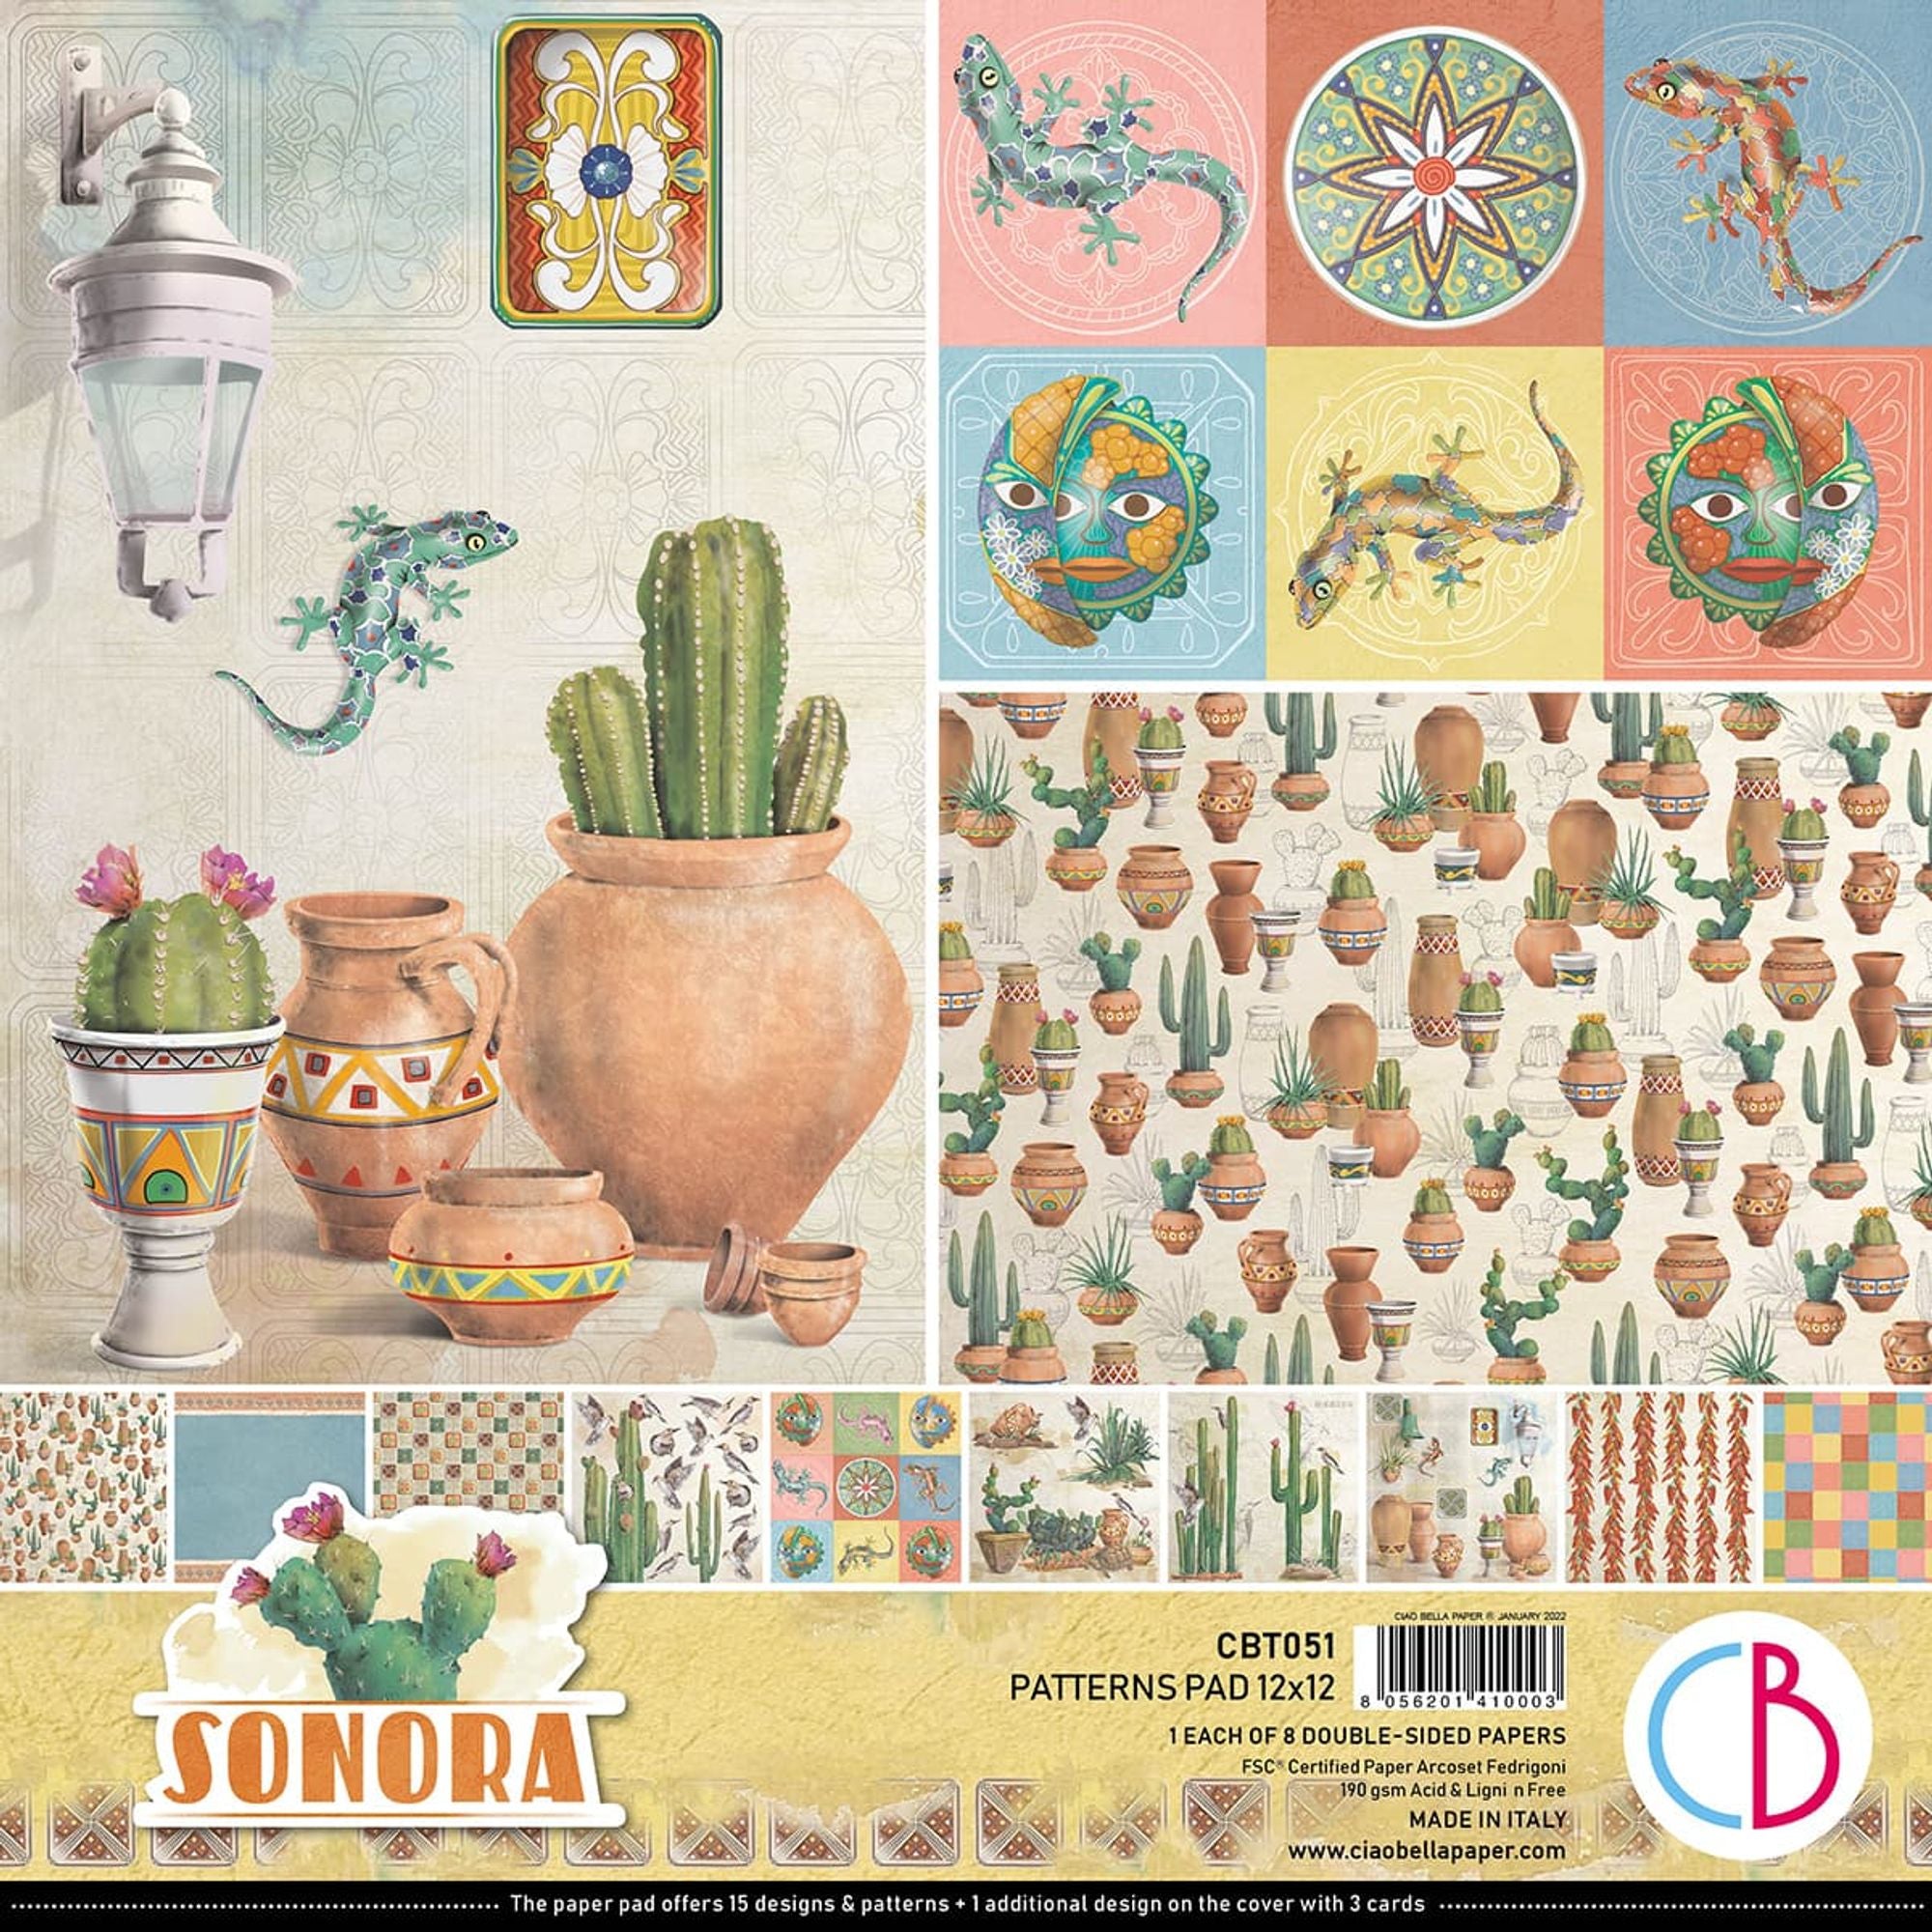 Ciao Bella Sonora Patterns Pad 12"x12" 8/Pkg